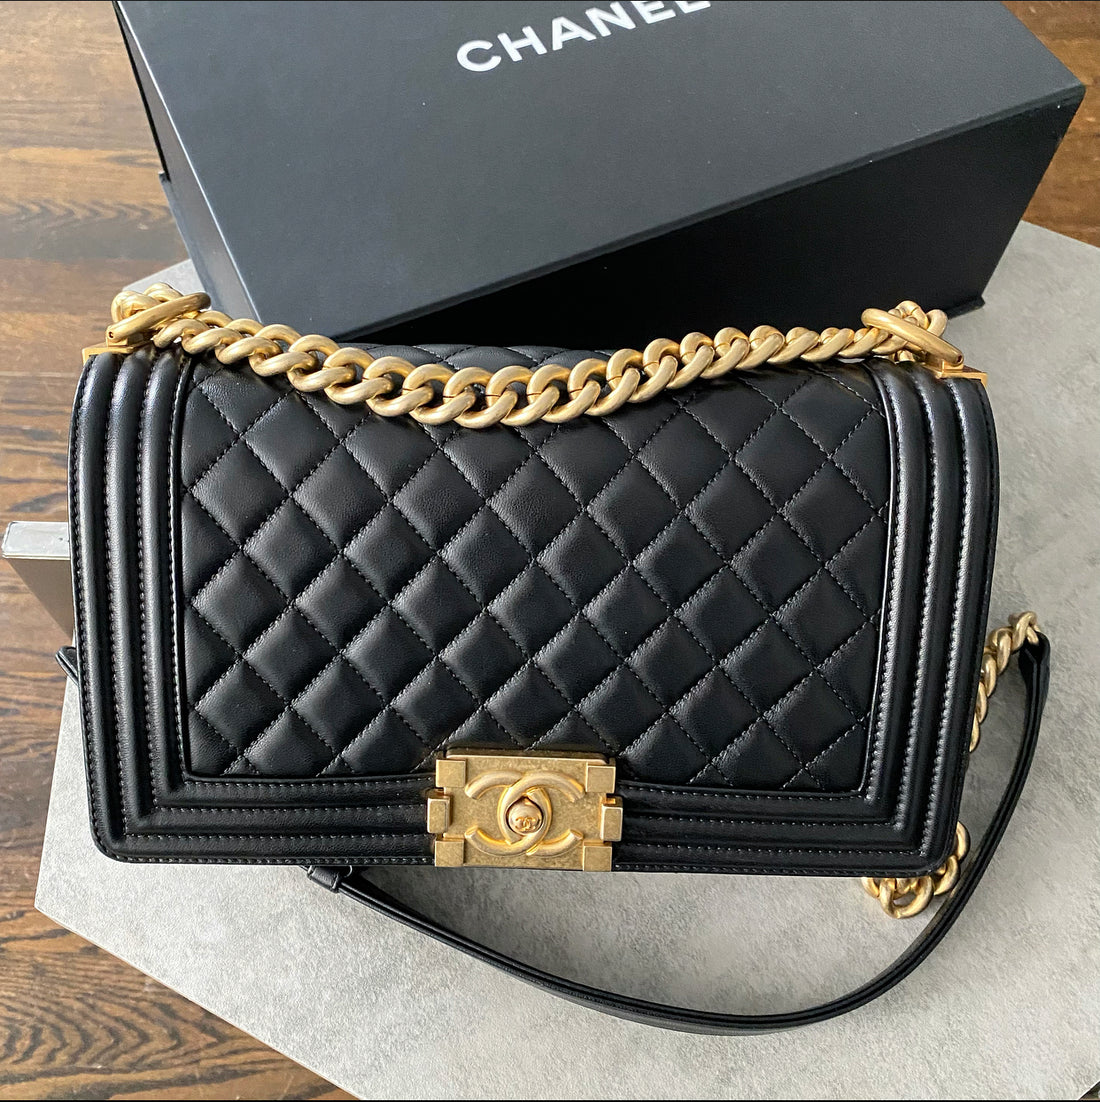 Chanel Black Lambskin Medium Le Boy Bag - GHW – I MISS YOU VINTAGE